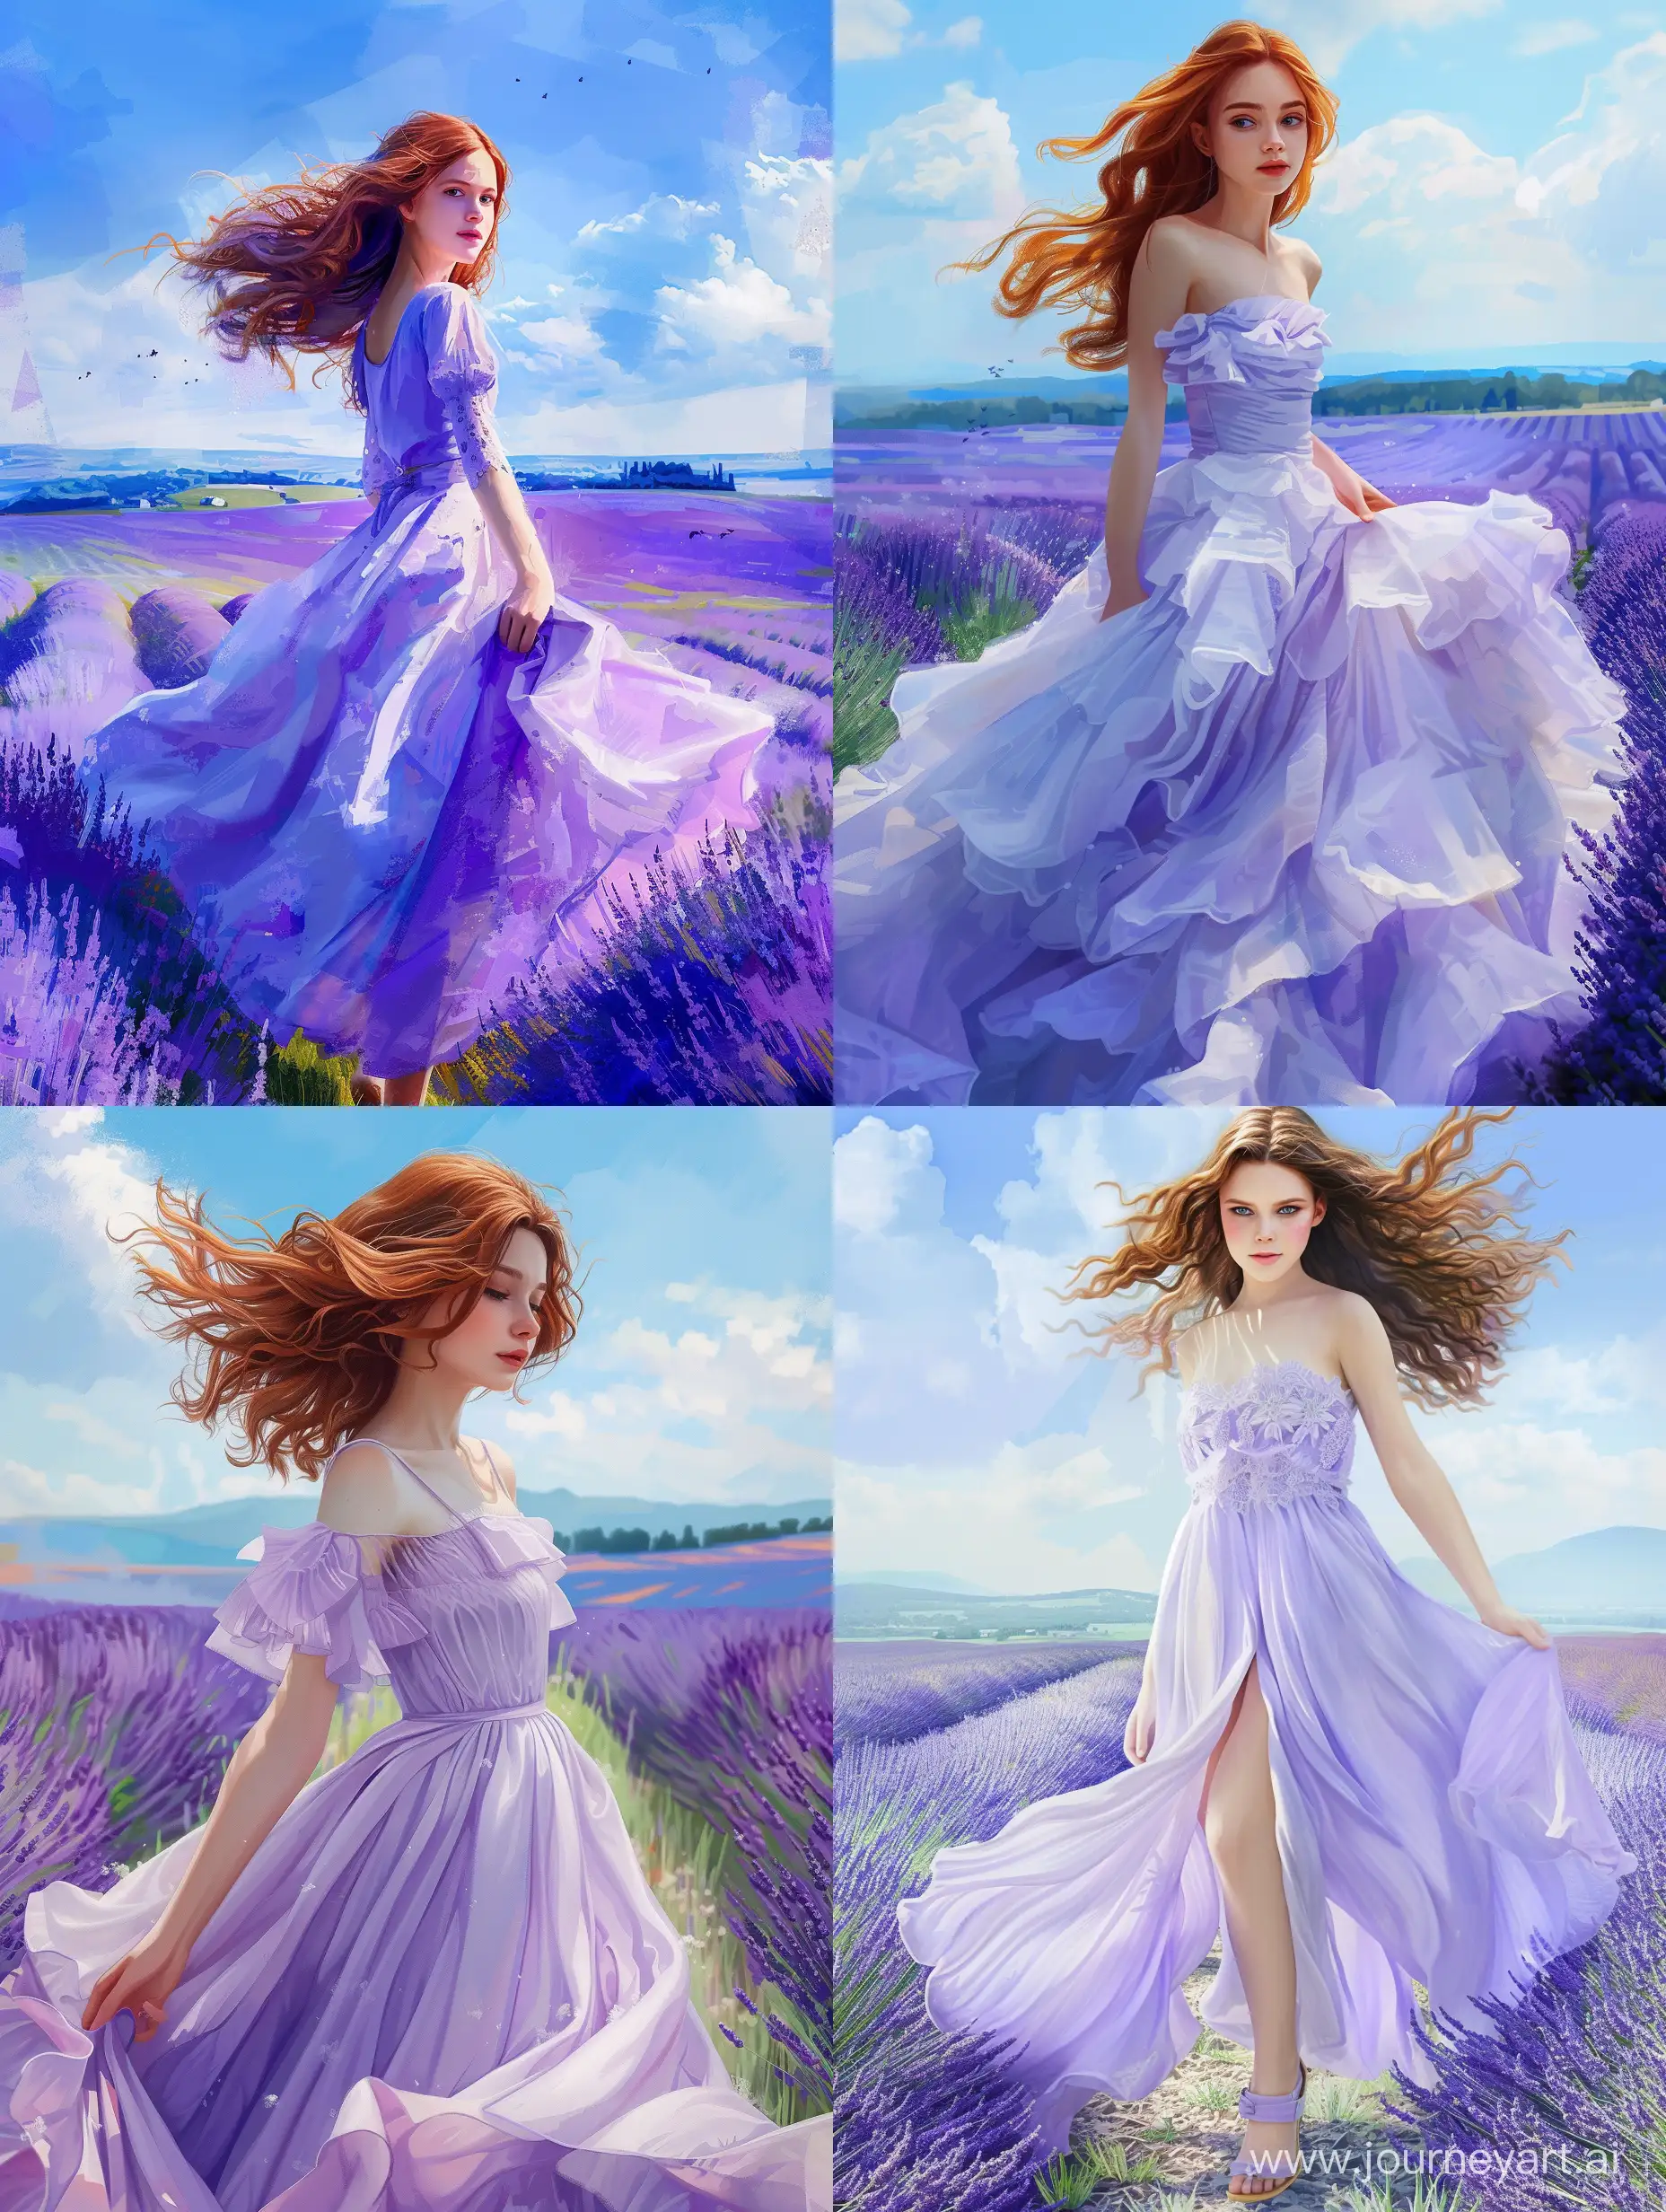 Graceful-Woman-in-Lilac-Dress-Strolling-Through-Lavender-Field